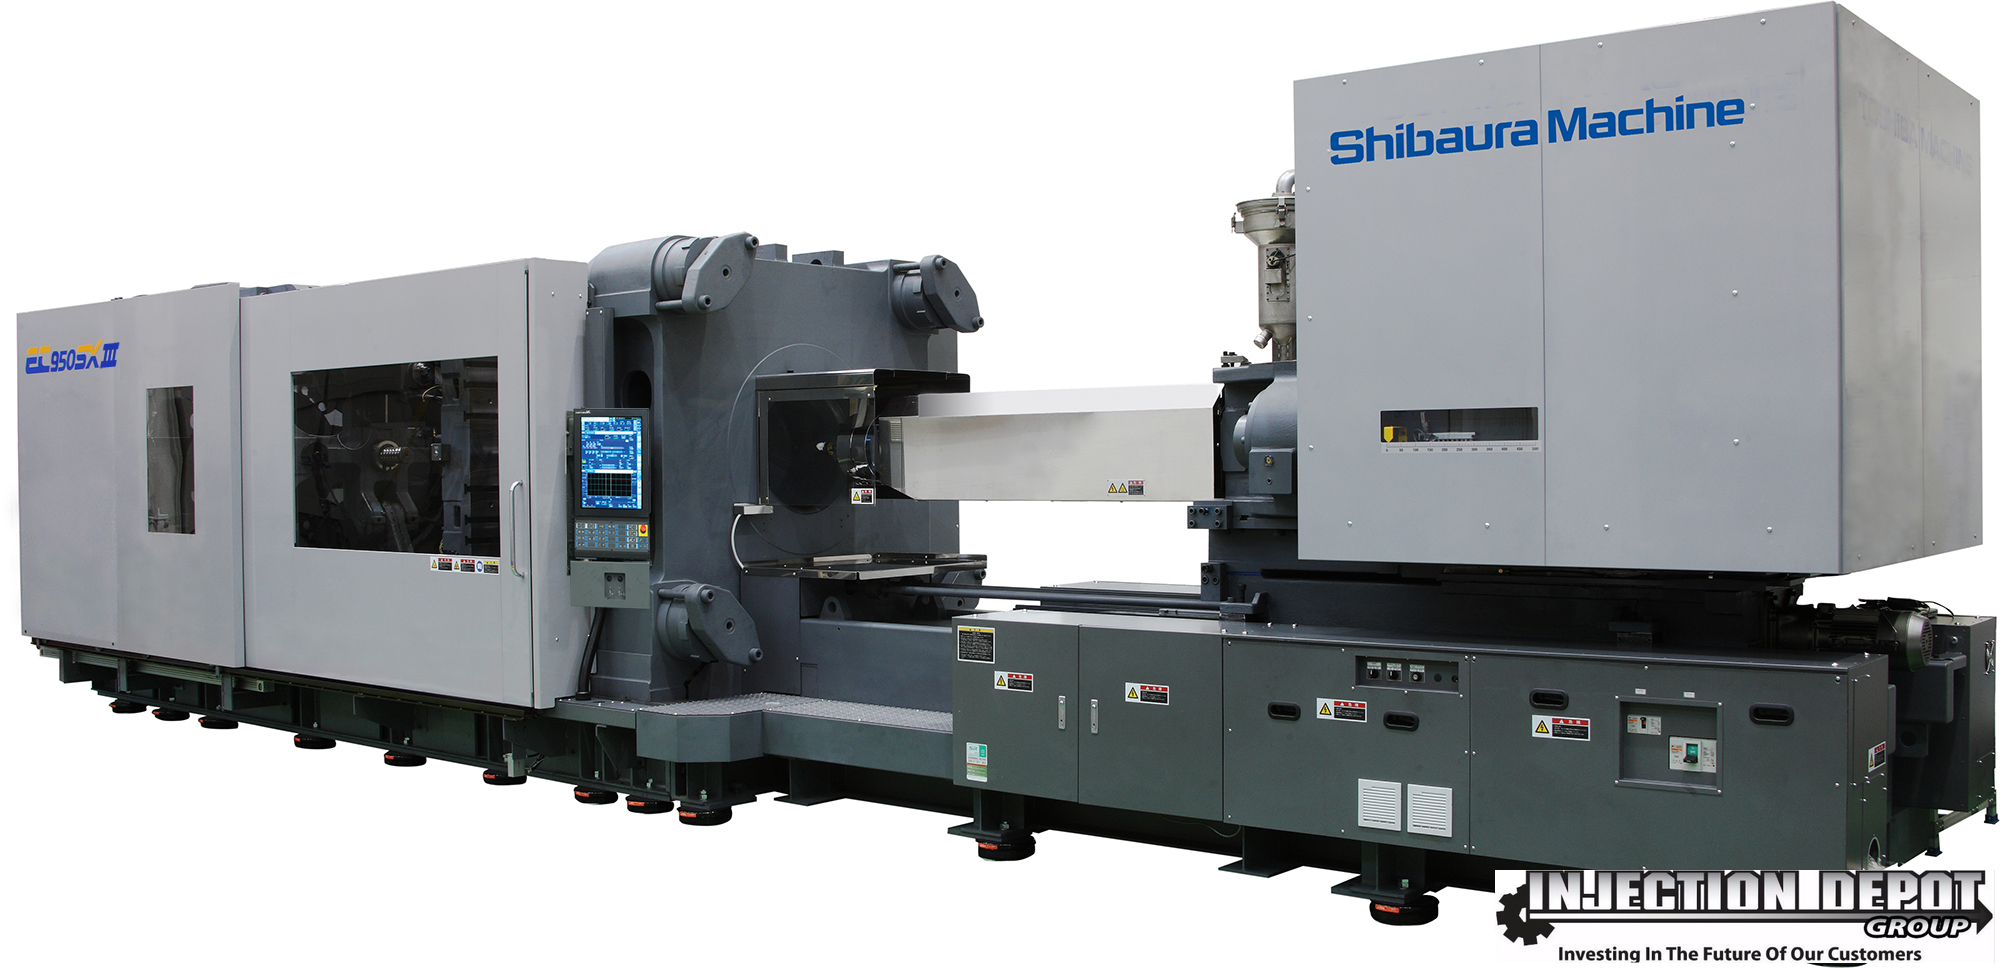 SHIBAURA MACHINE EC950SXIIIV70-i120 PVC Horizontal Injection Moulding Machines | INJECTION DEPOT GROUP